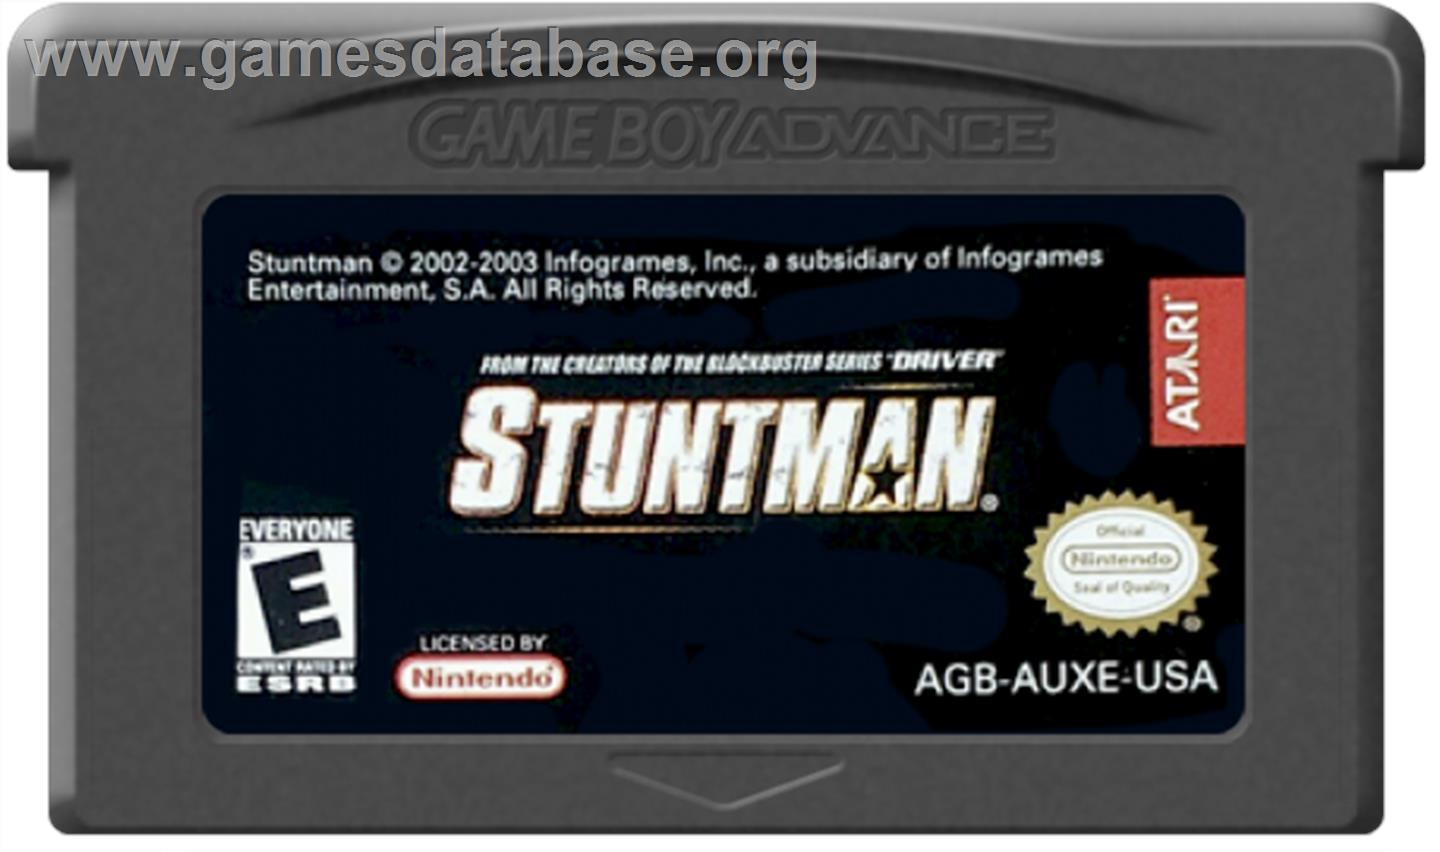 Stuntman - Nintendo Game Boy Advance - Artwork - Cartridge